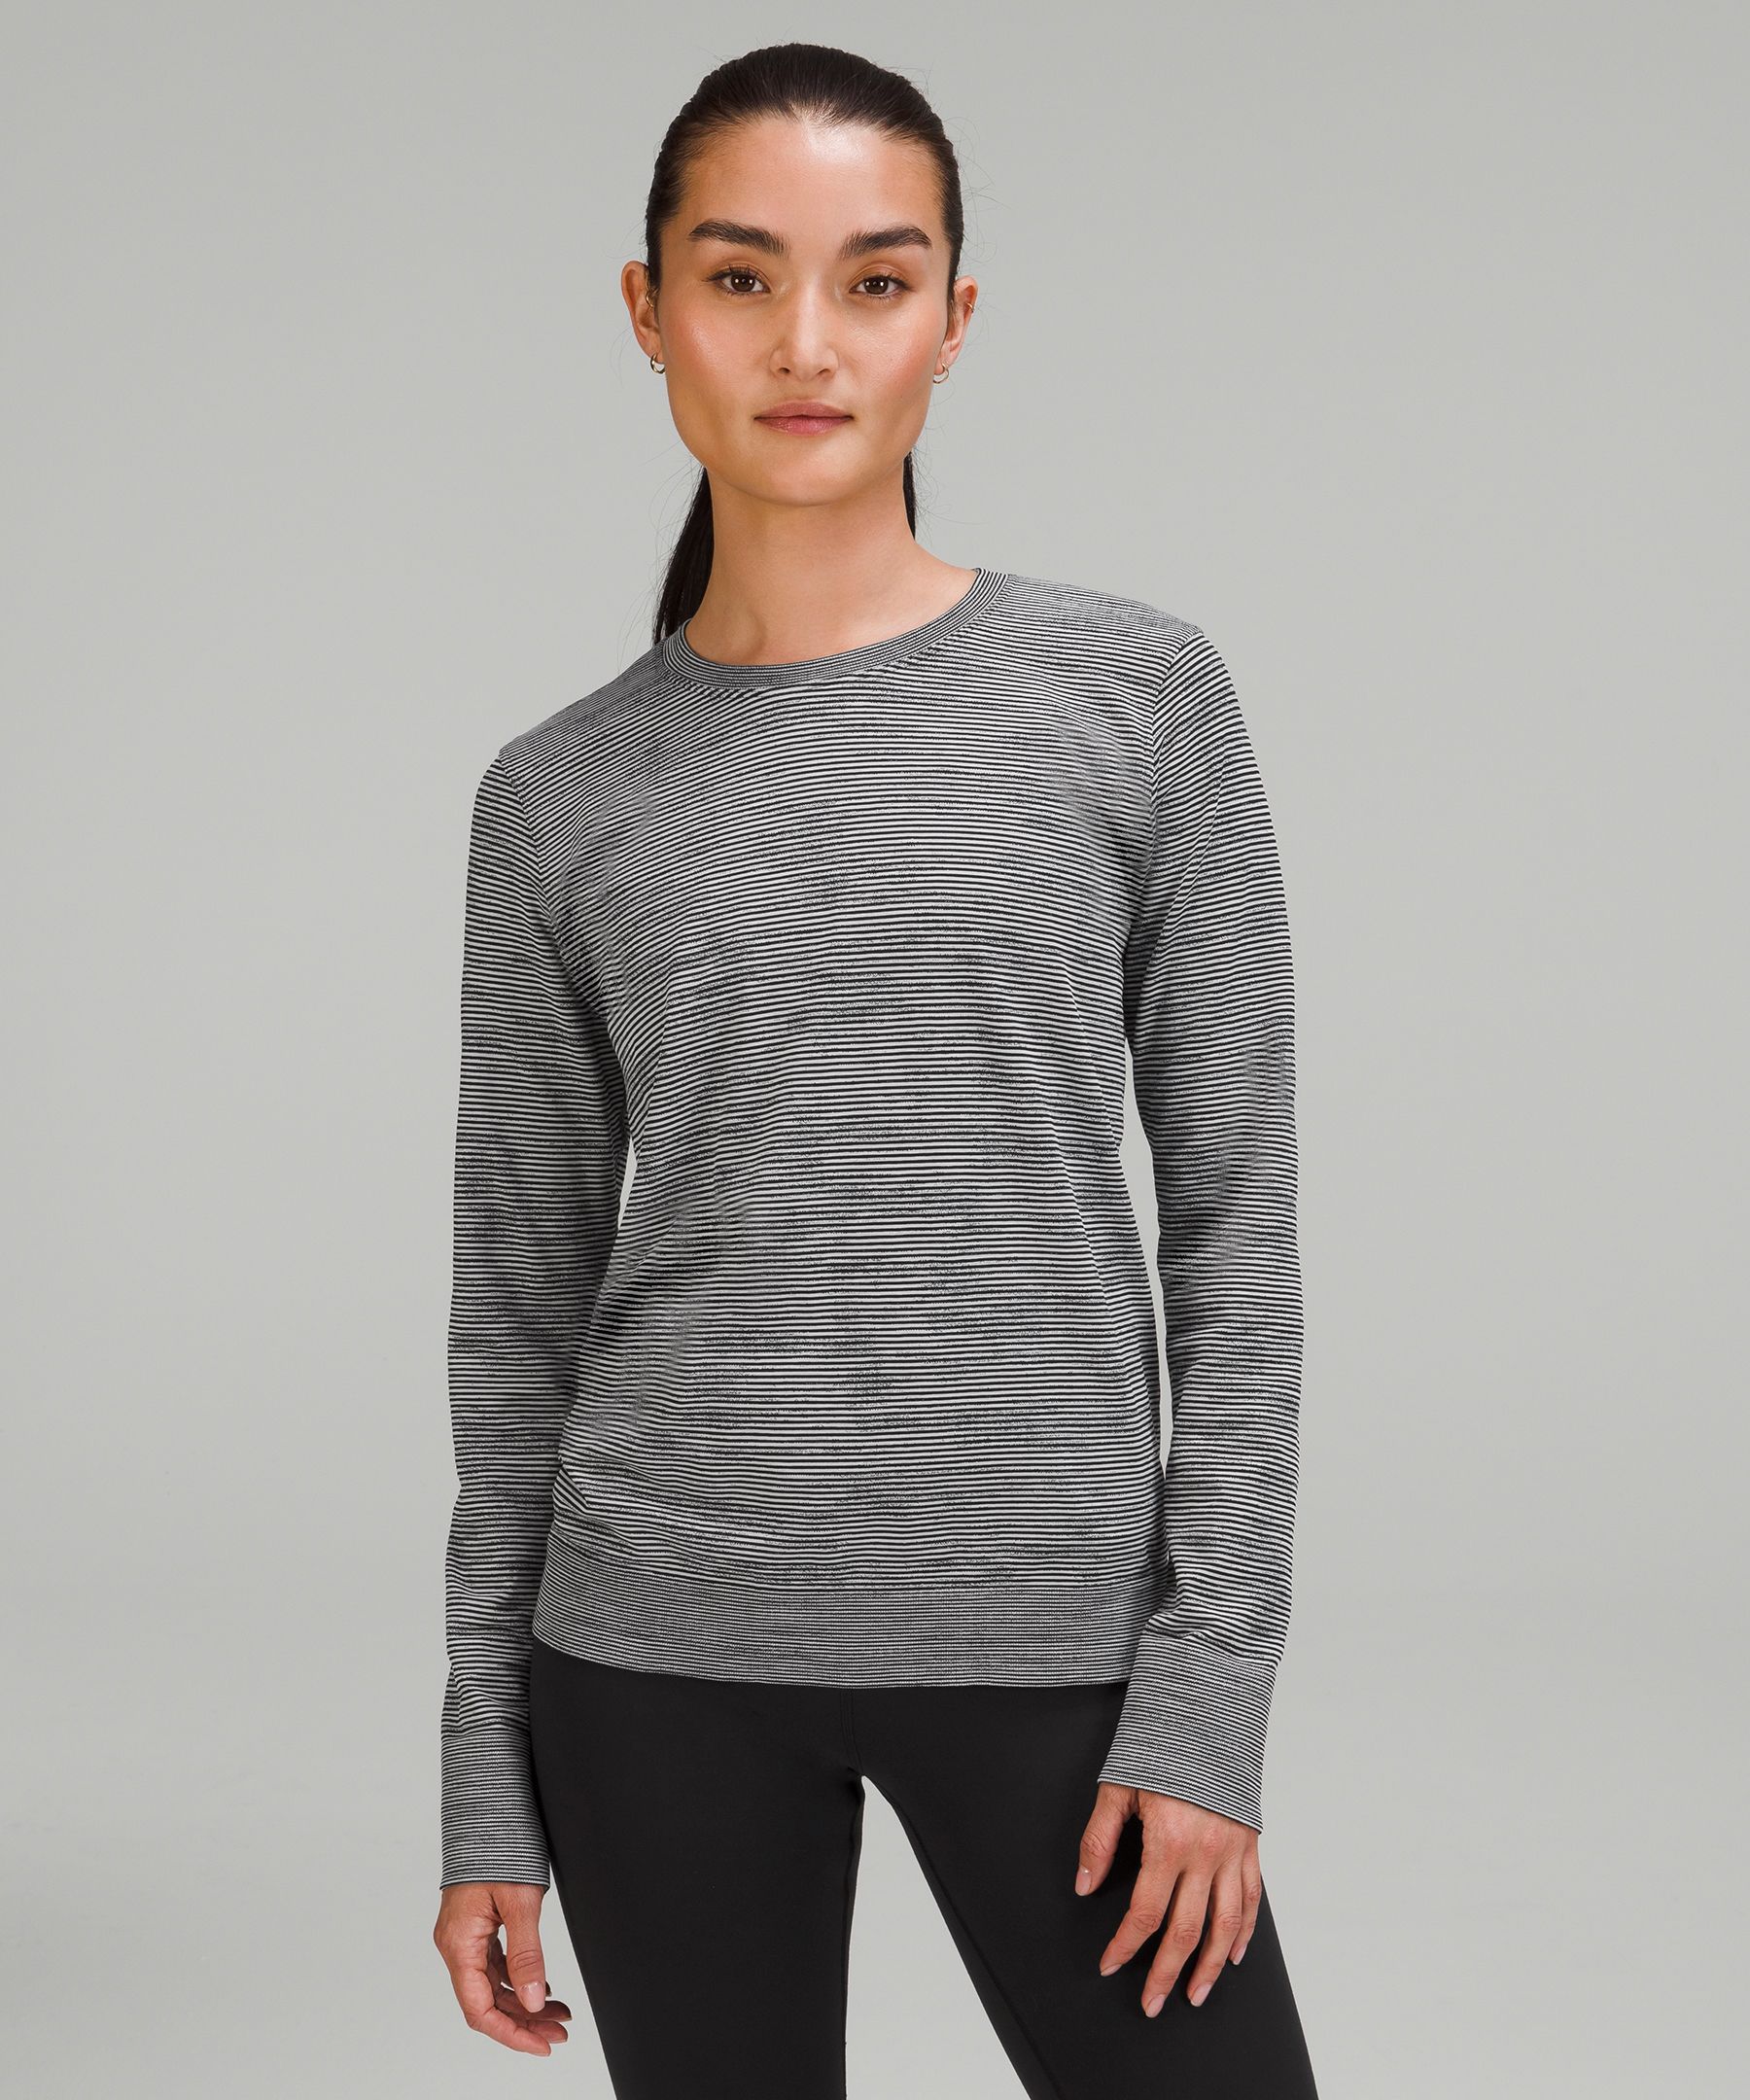 Lululemon Swiftly Relaxed-fit Long Sleeve Shirt In Chroma Check Stripe Alpine White/black/grey Multi